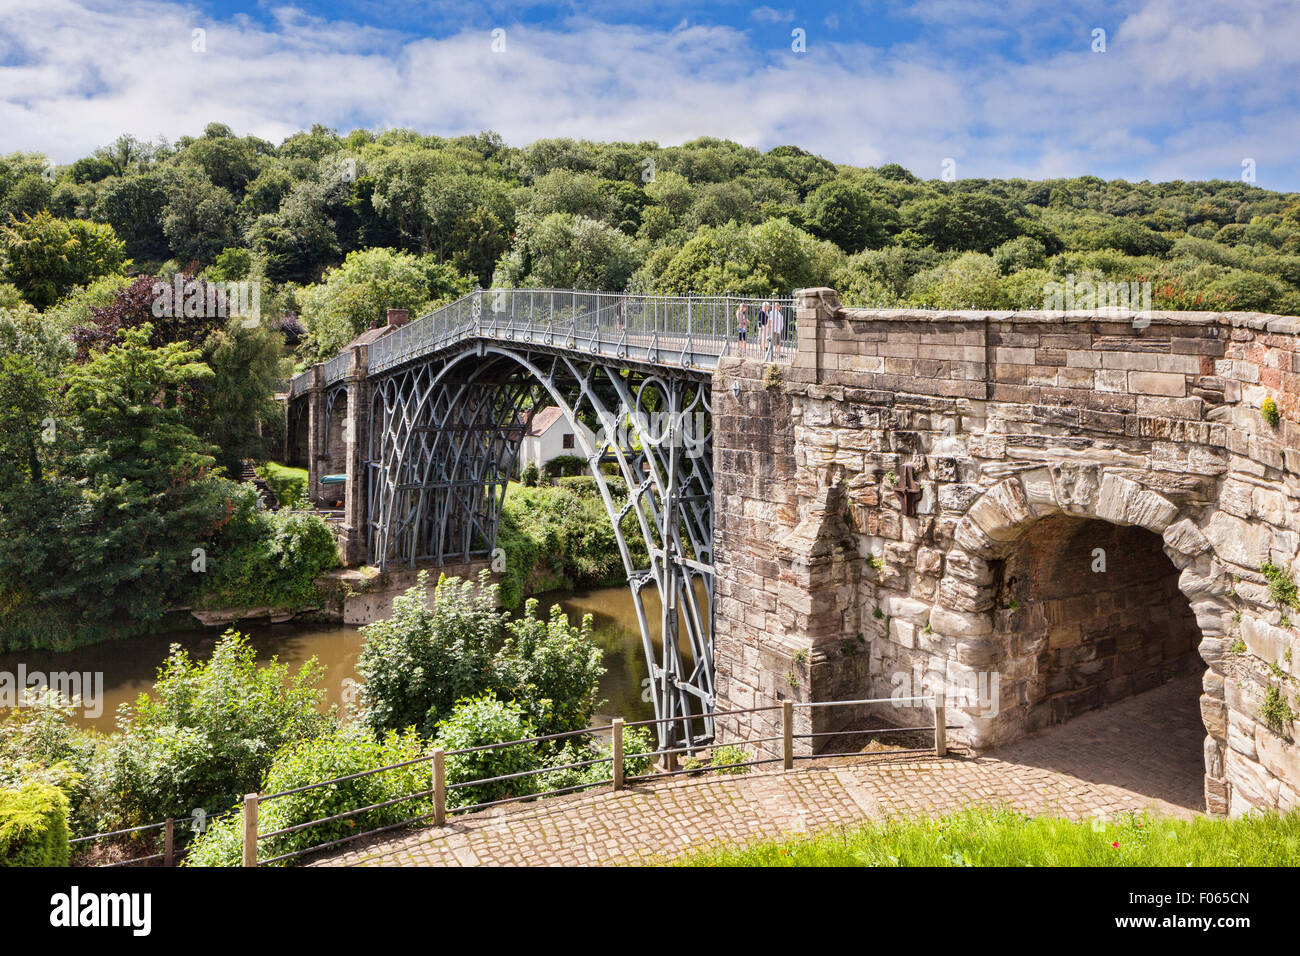 Abraham Darby's Iron Bridge, the first cast iron bridge, crossing the gorge of the River Severn at Ironbridge, Shropshire... Stock Photo